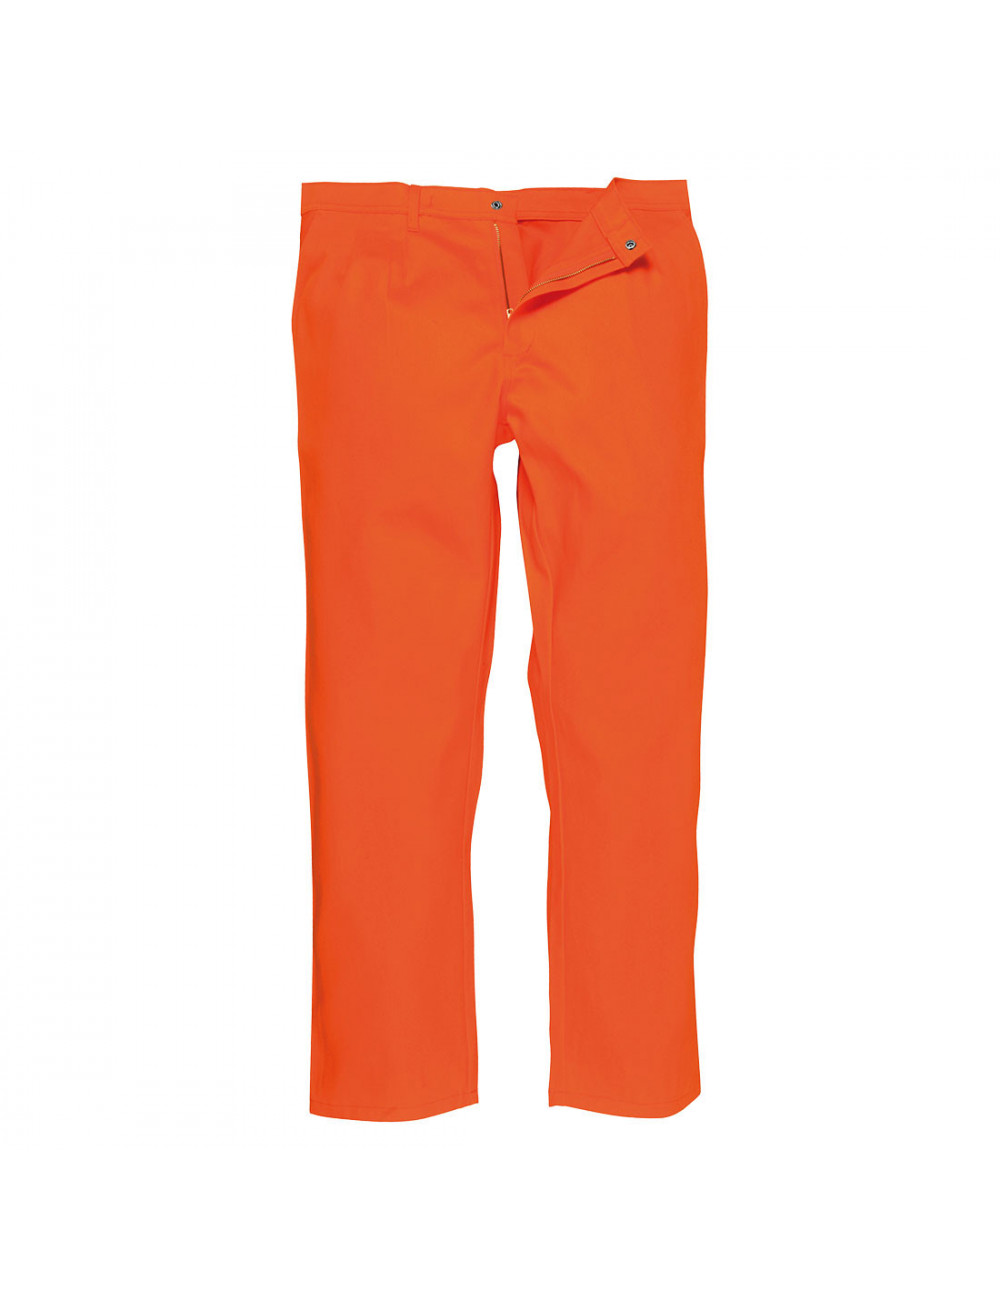 Bizweld trousers orange Portwest